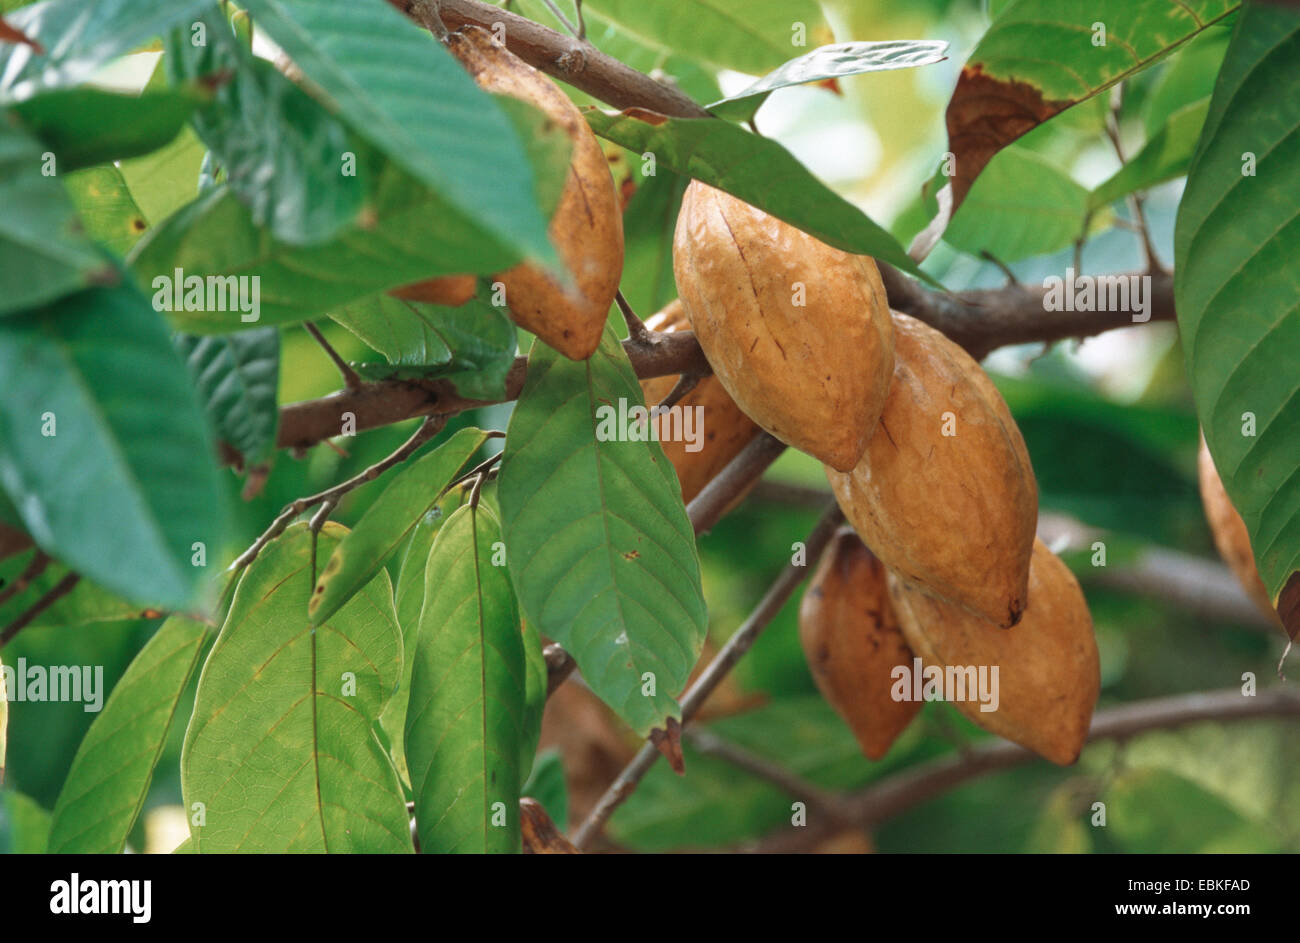 chocolate, cocoa tree (Theobroma cacao), twig with fruits Stock Photo